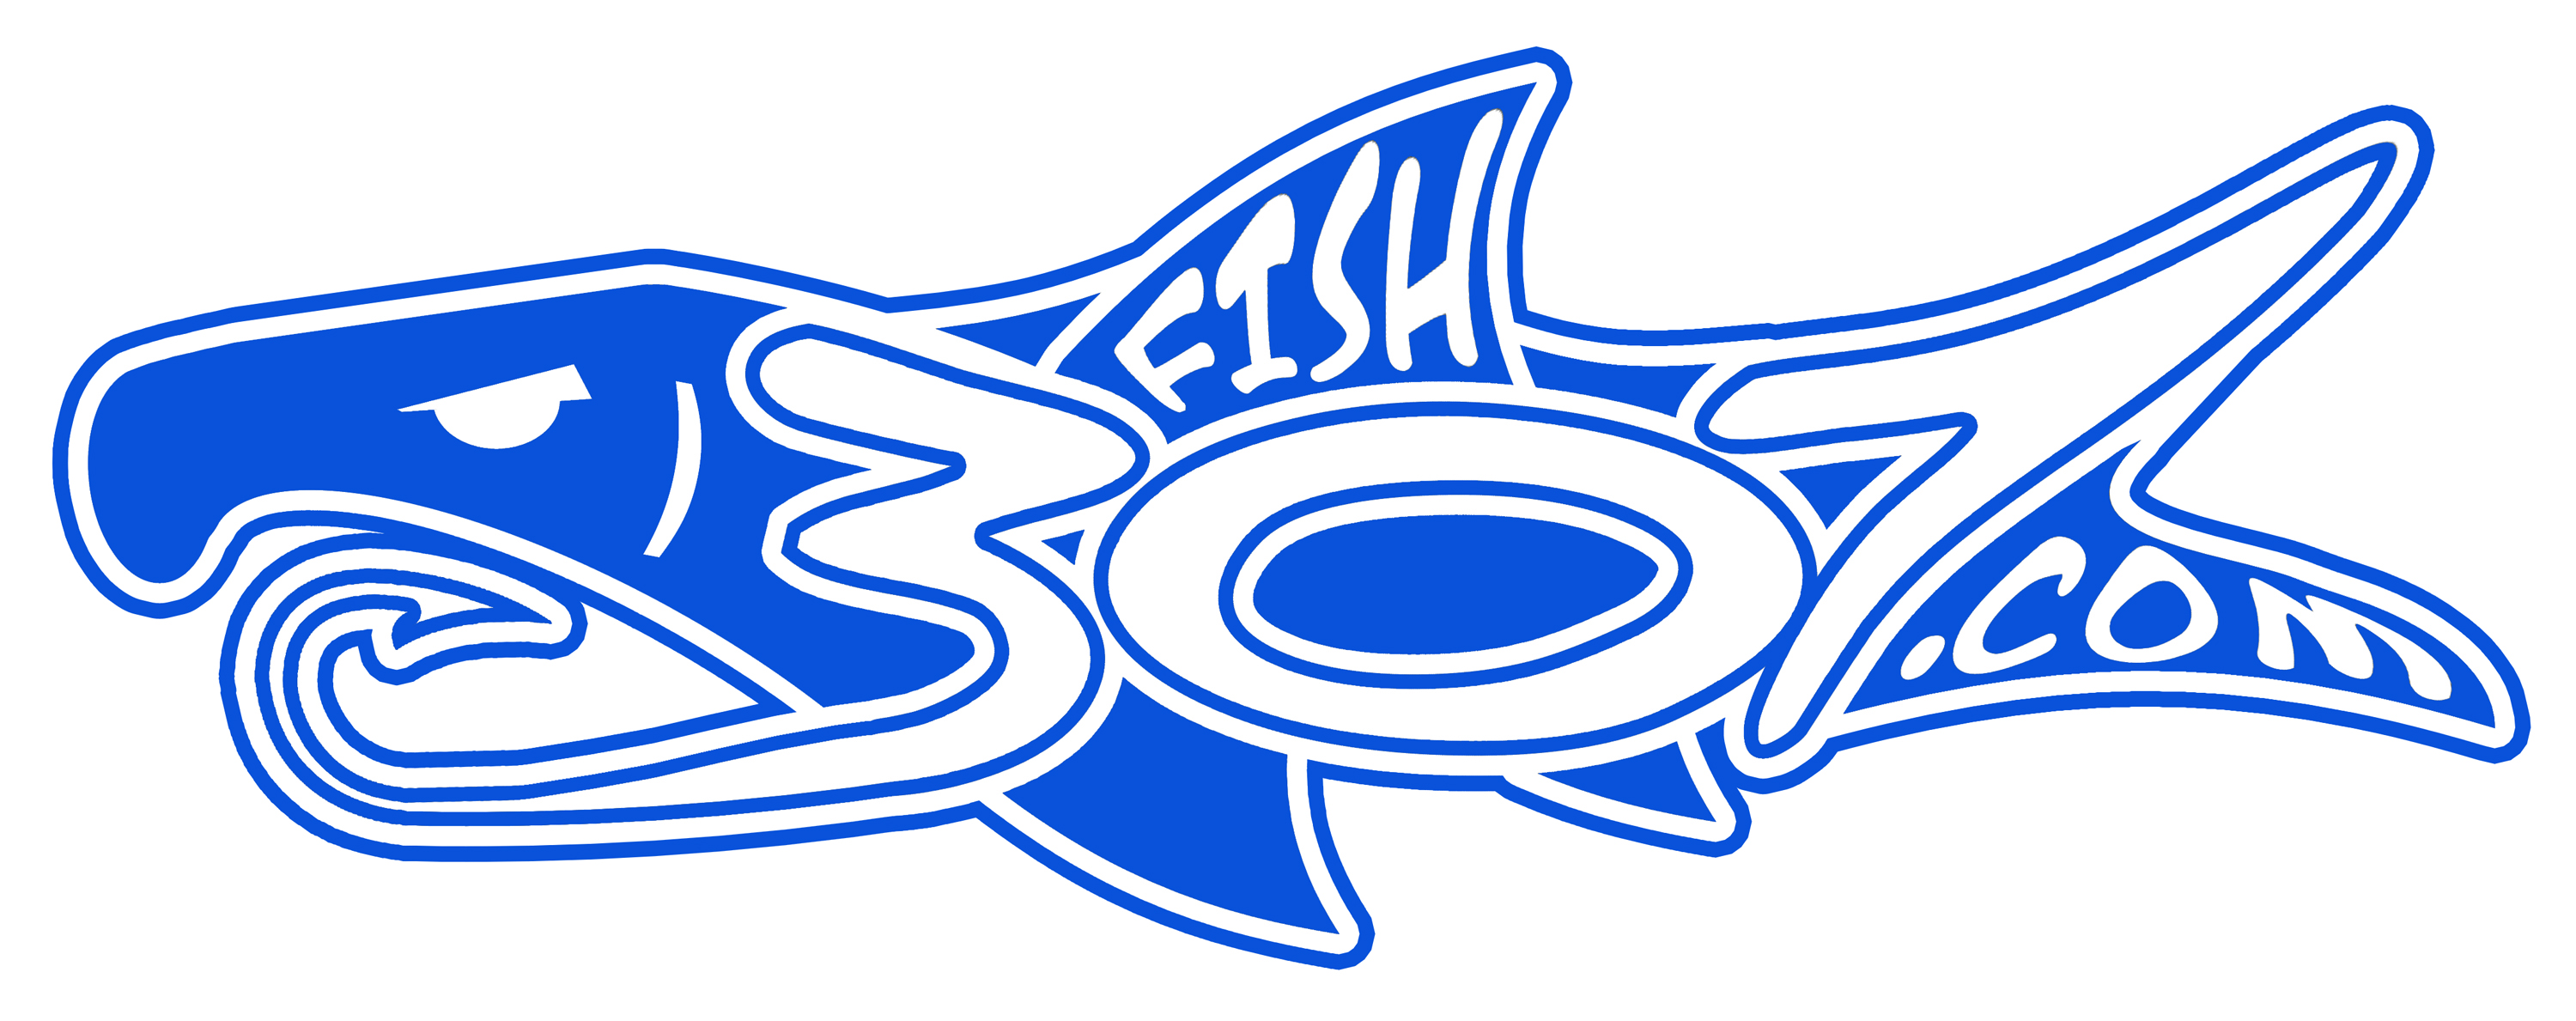 Image result for fish307 logo